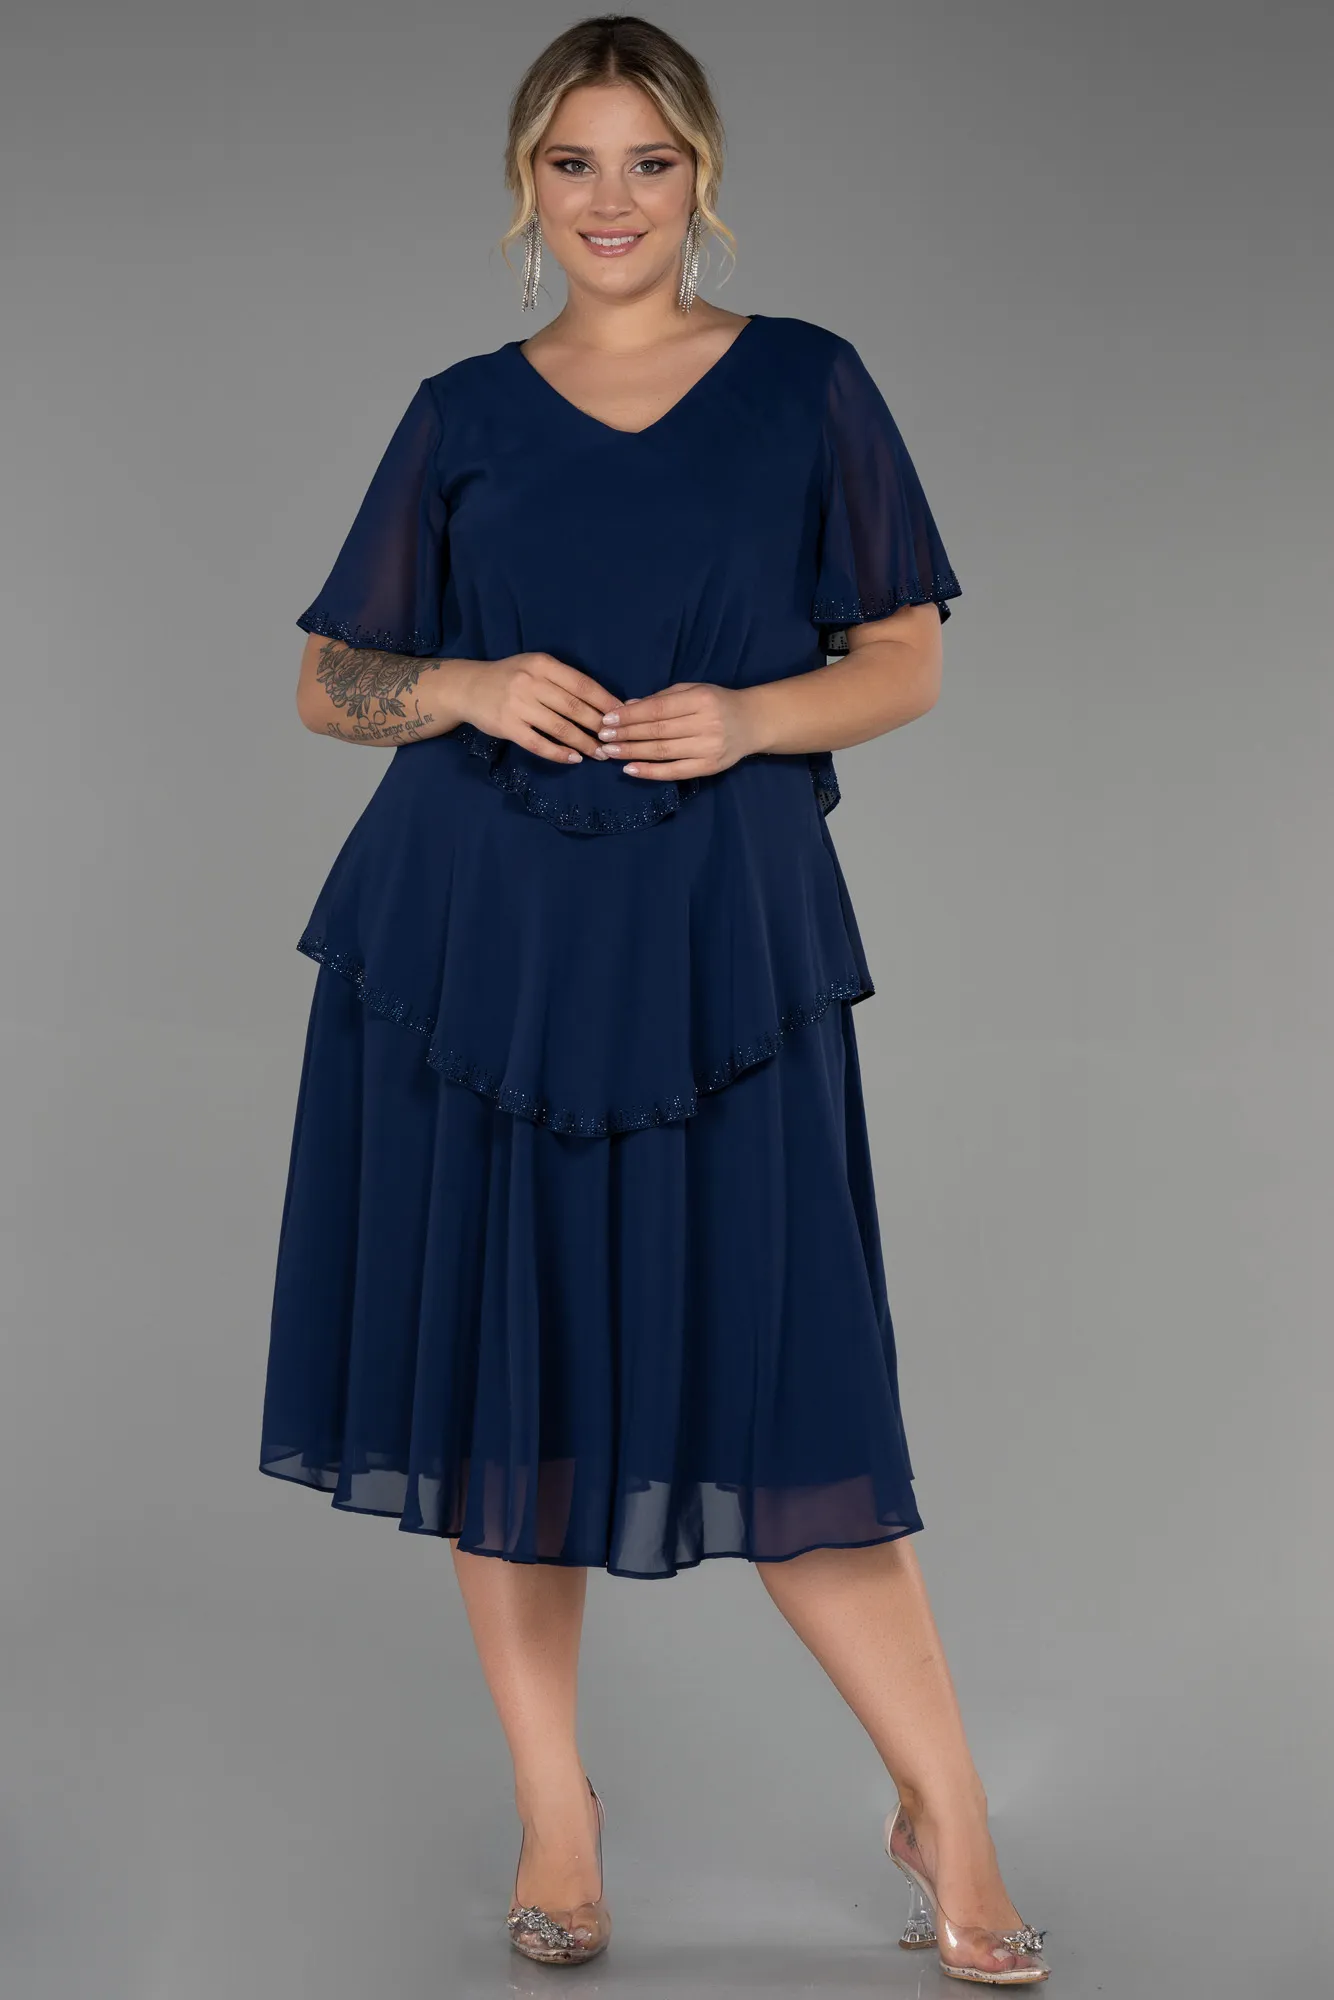 Navy Blue-Midi Chiffon Plus Size Evening Dress ABK1825